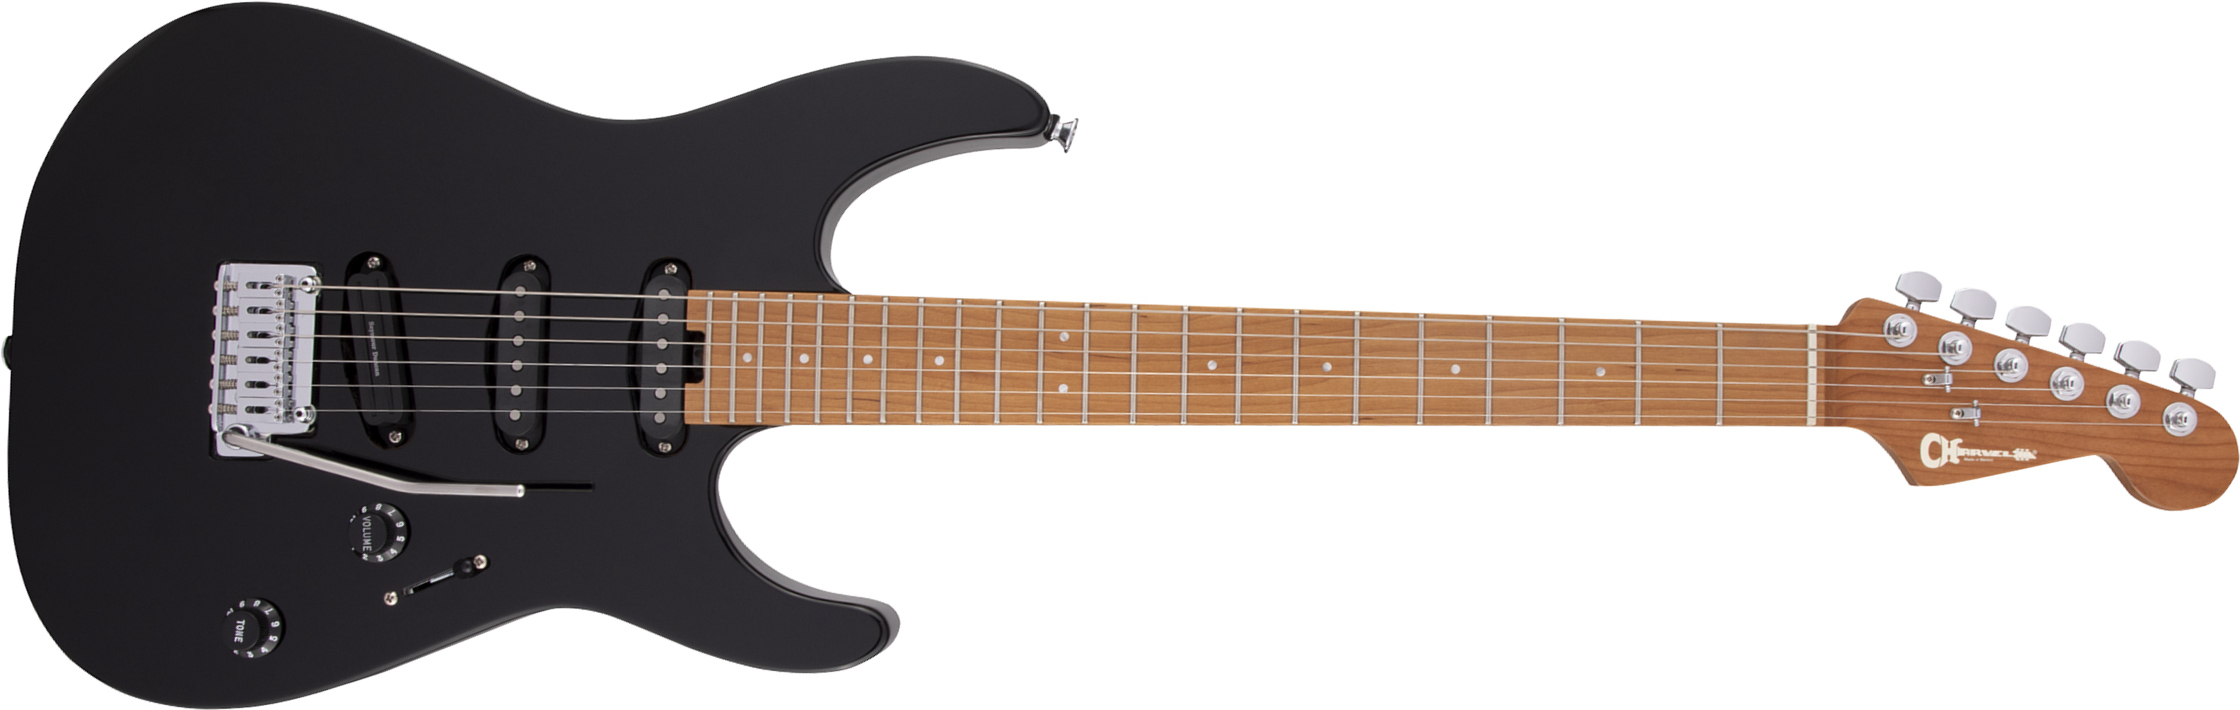 Charvel Dinky Dk22 Sss 2pt Cm Pro-mod 3s Seymour Duncan Trem Mn - Gloss Black - Elektrische gitaar in Str-vorm - Main picture